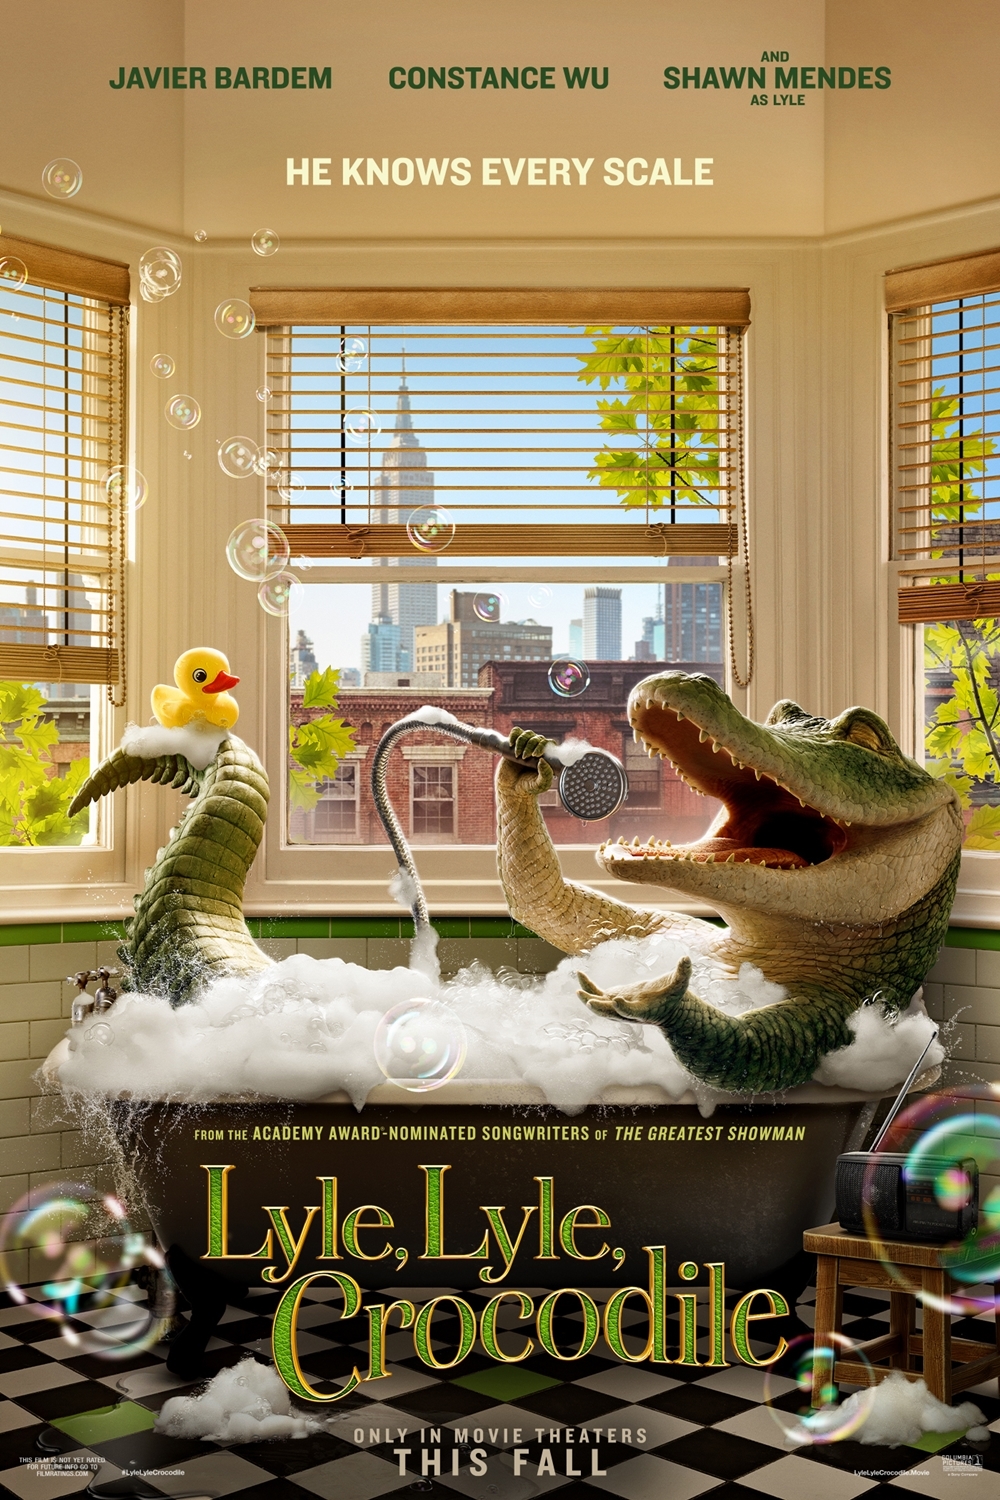 Still of Lyle, Lyle, Crocodile